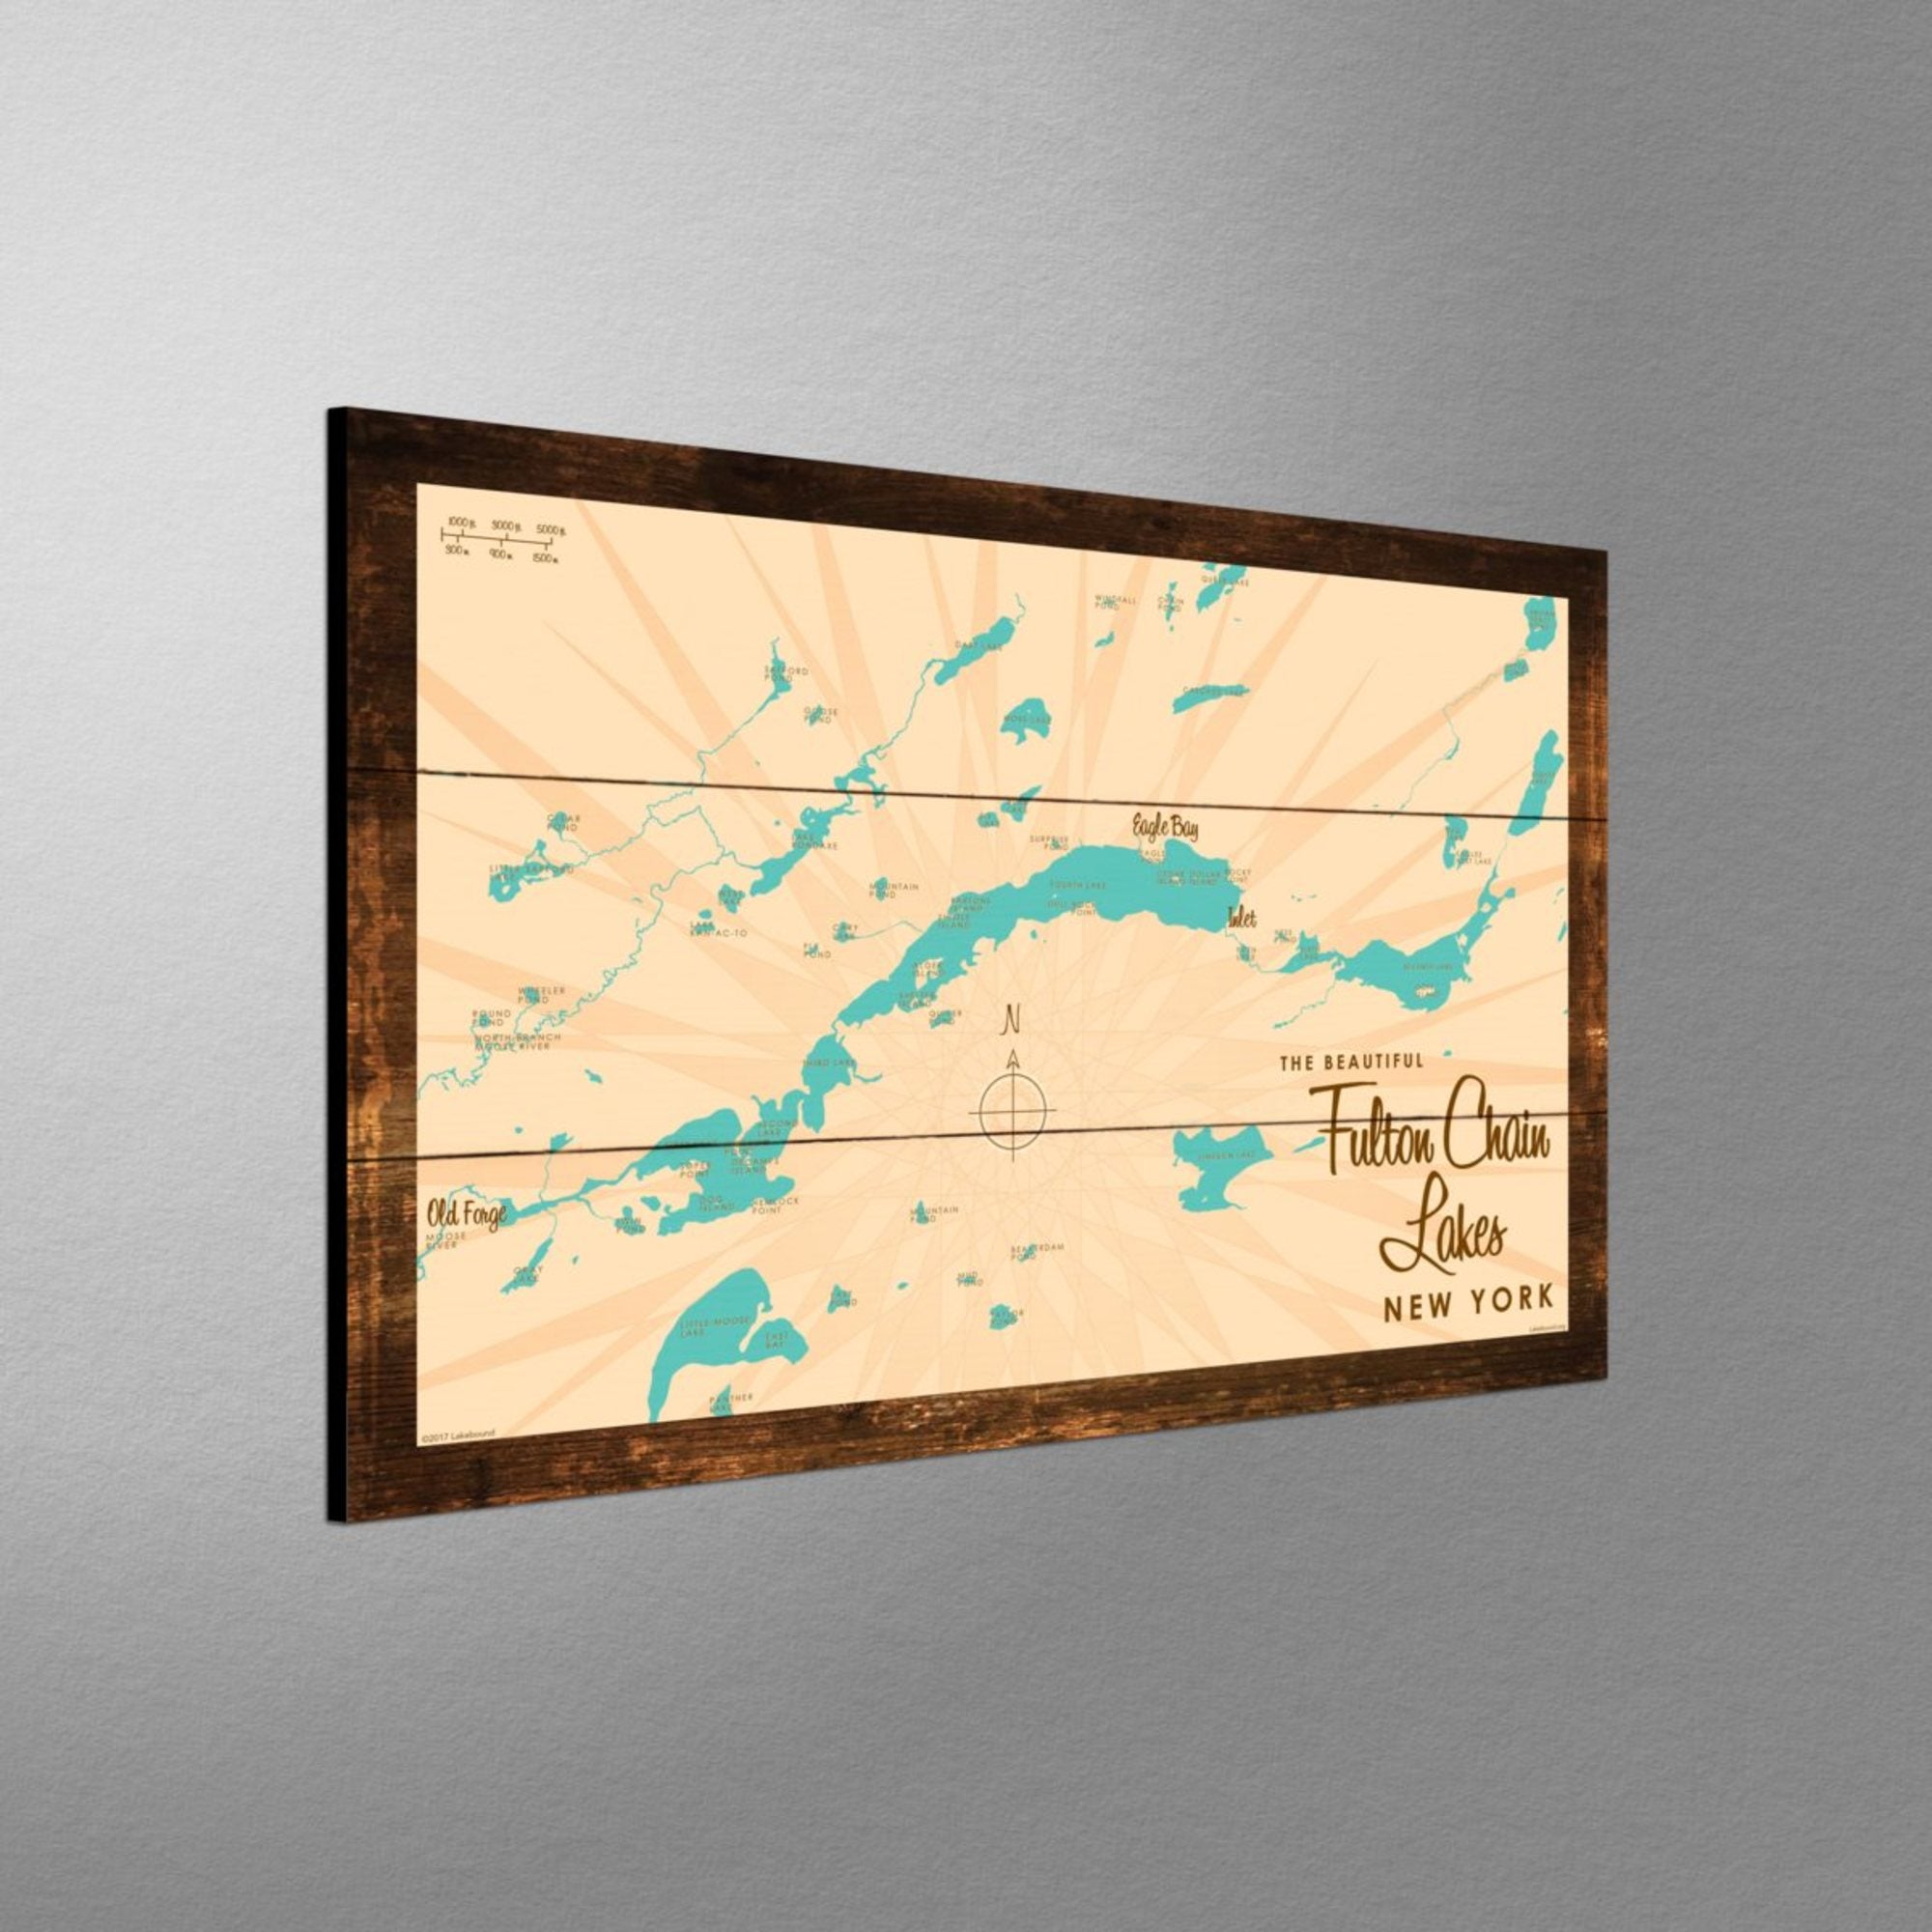 Fulton Chain Lakes New York, Rustic Wood Sign Map Art